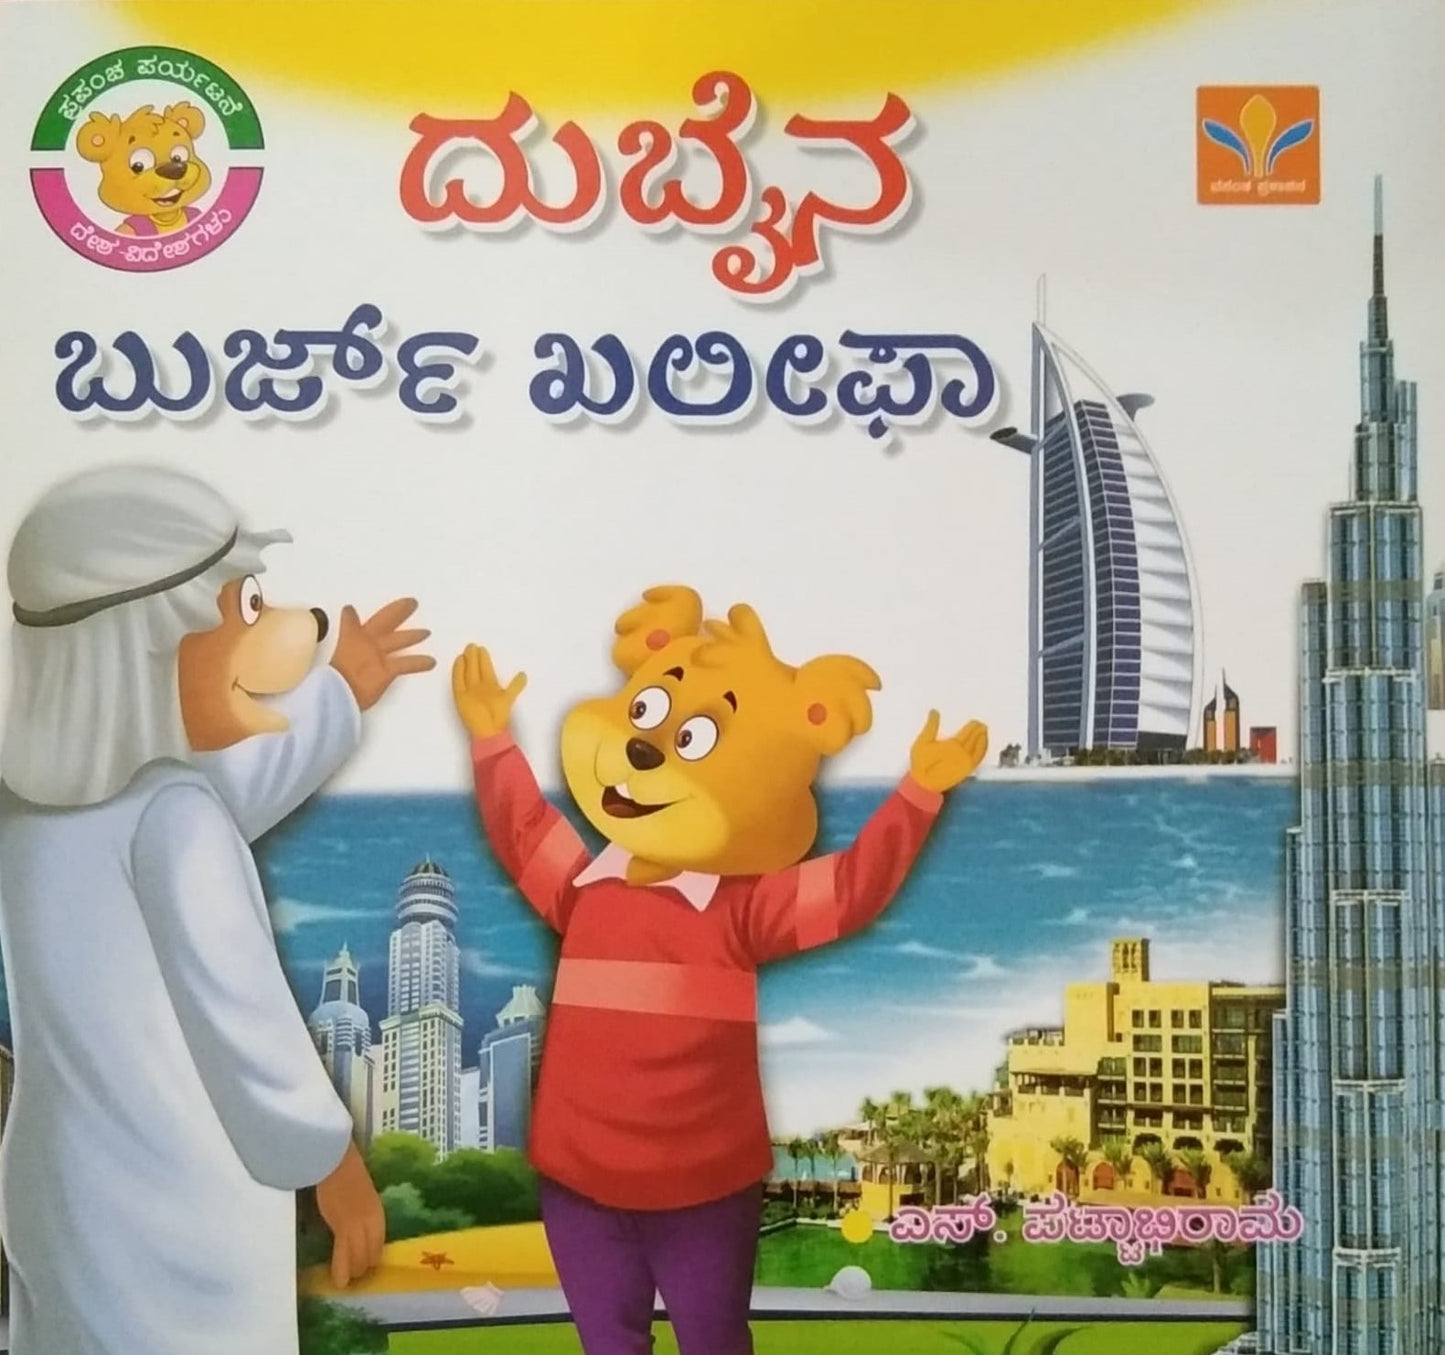 Dubaina Burj Kaleepha ia a book of Children's Stories Book, Written by S. Pattabhirama, Published by Vasantha Prakashana